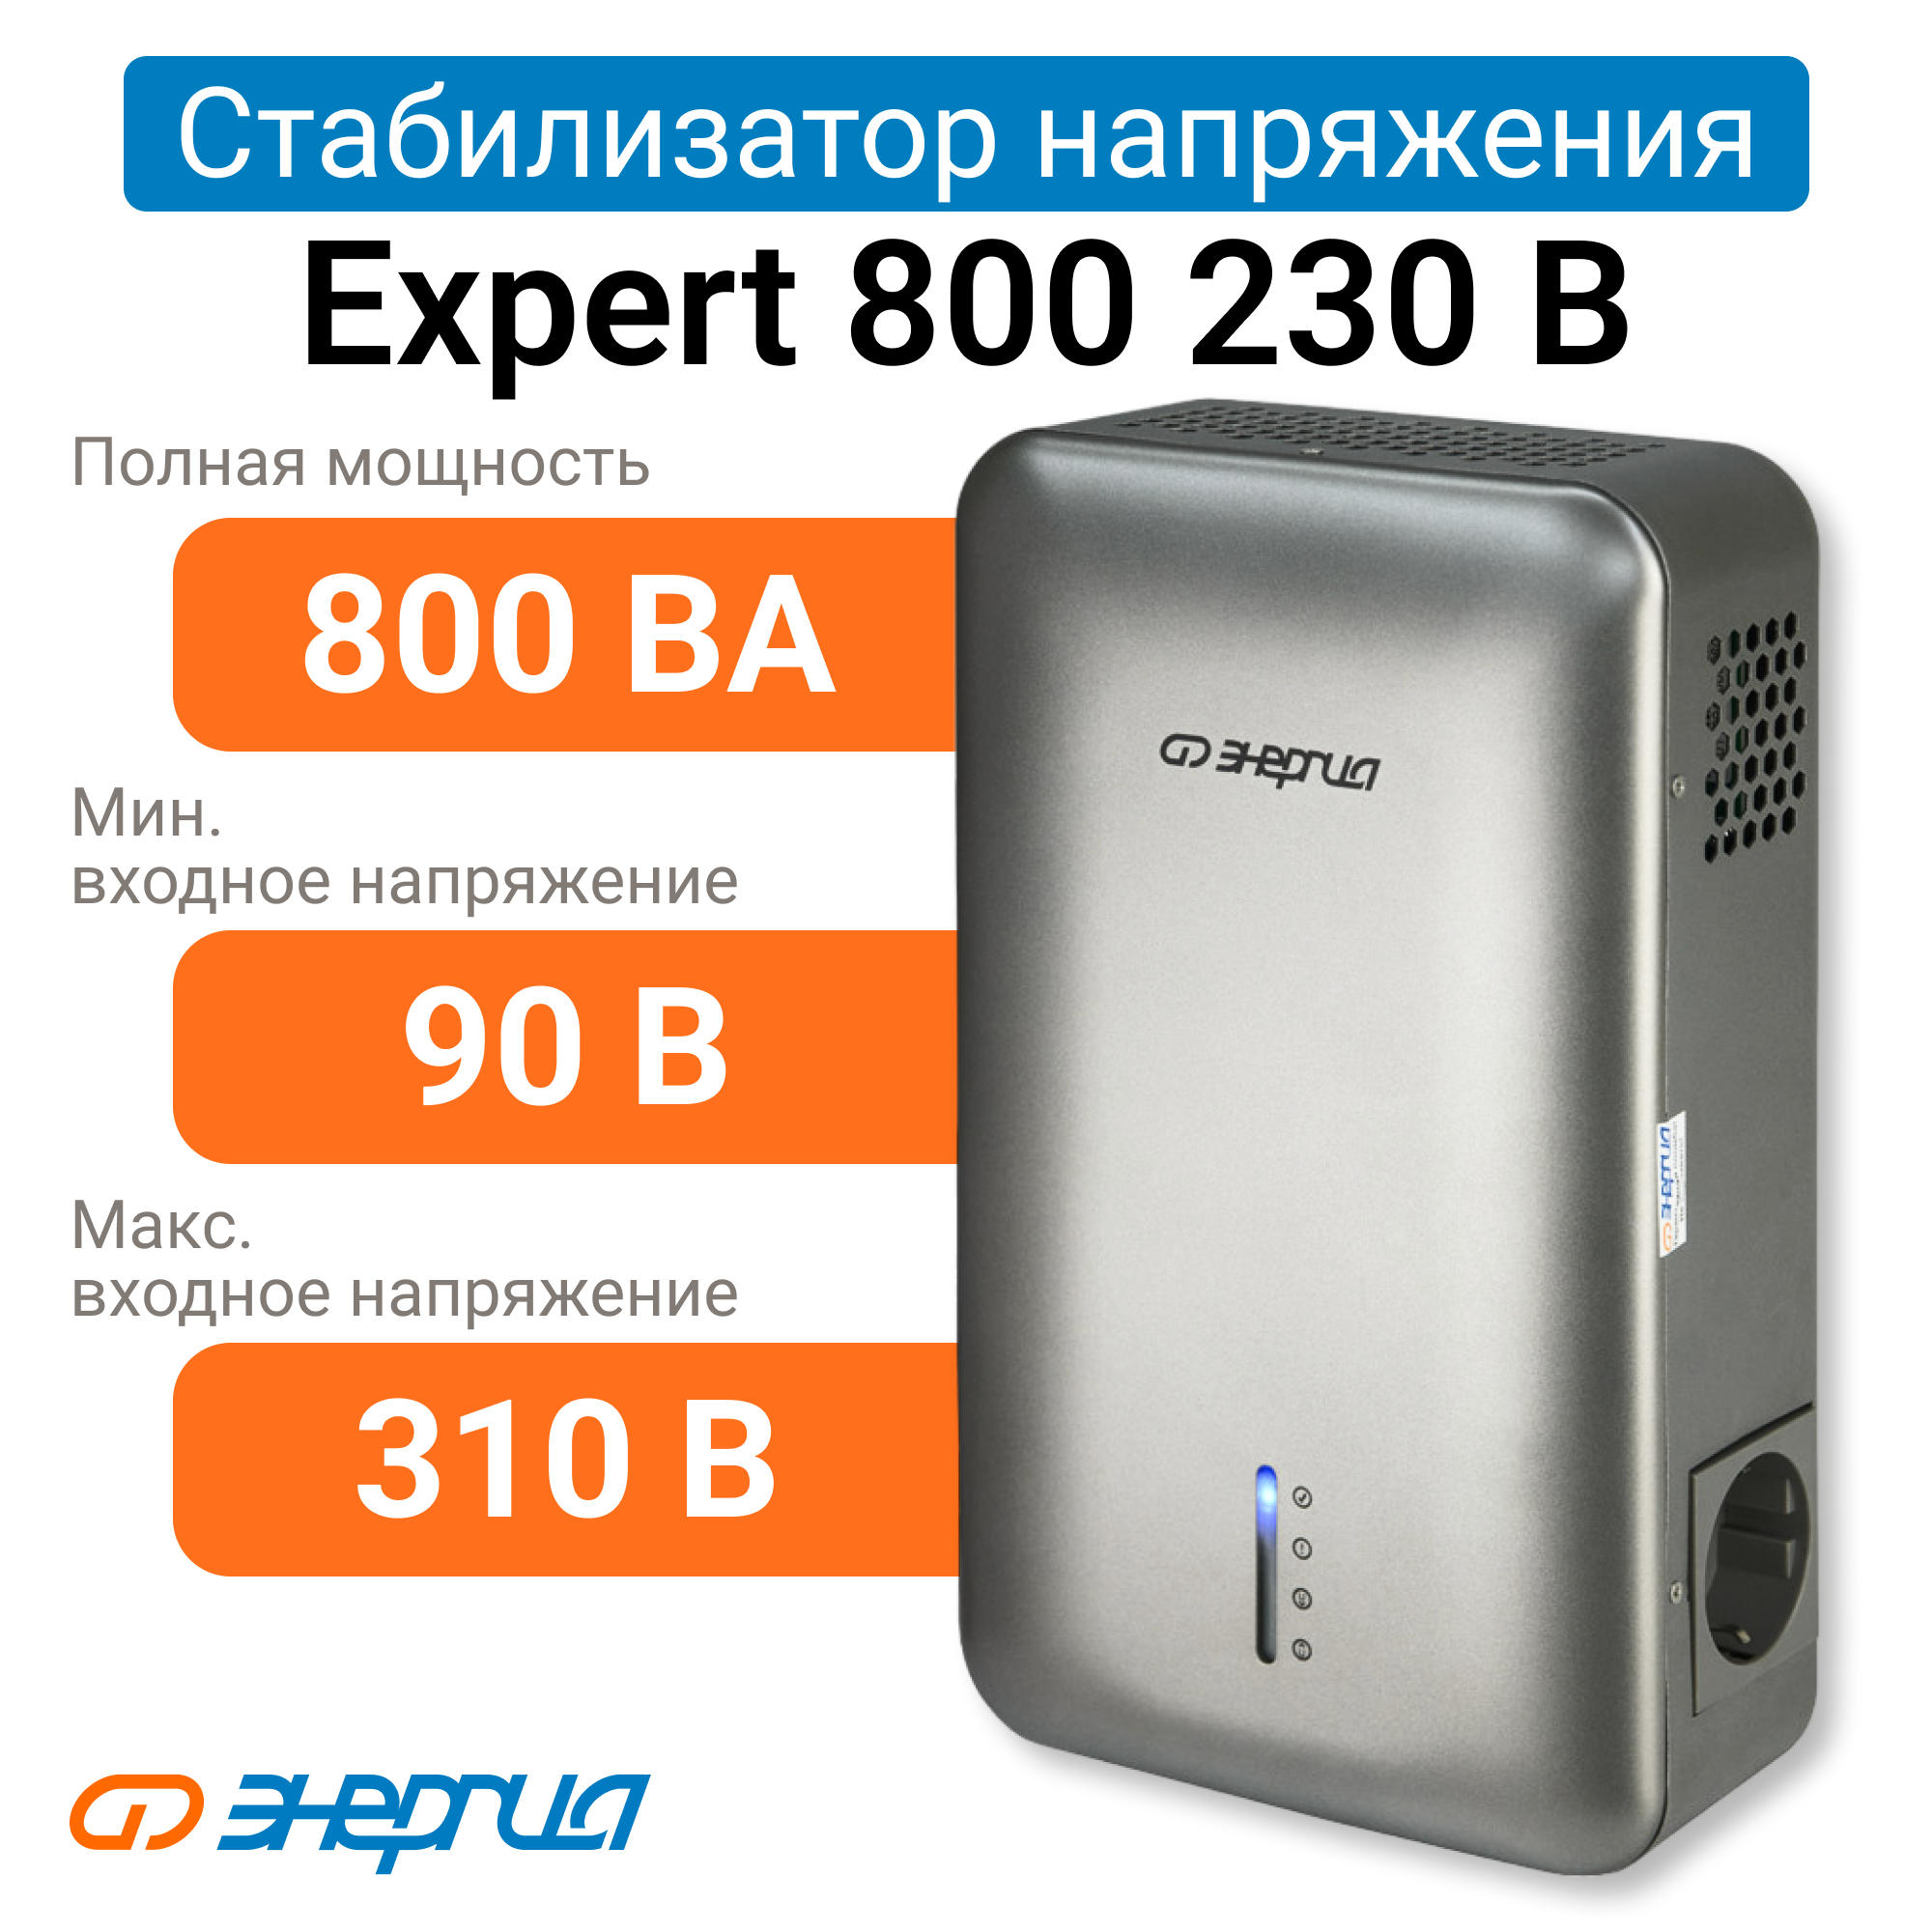 Стабилизатор напряжения Энергия Expert 800 230В (Е0101-0245) стабилизатор напряжения энергия hybrid 2000 е0101 0147